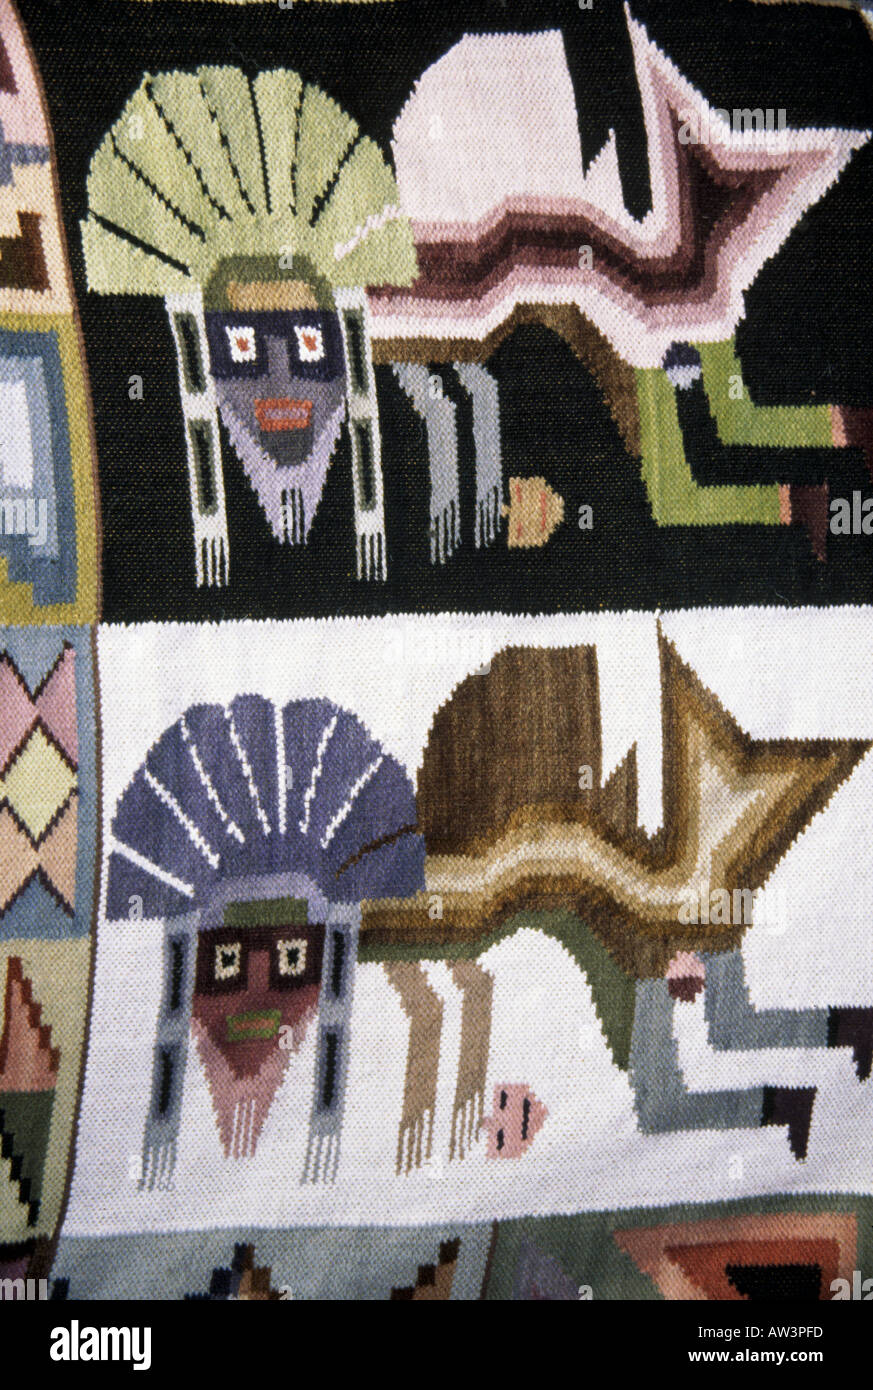 Perú - Diseños textiles Foto de stock